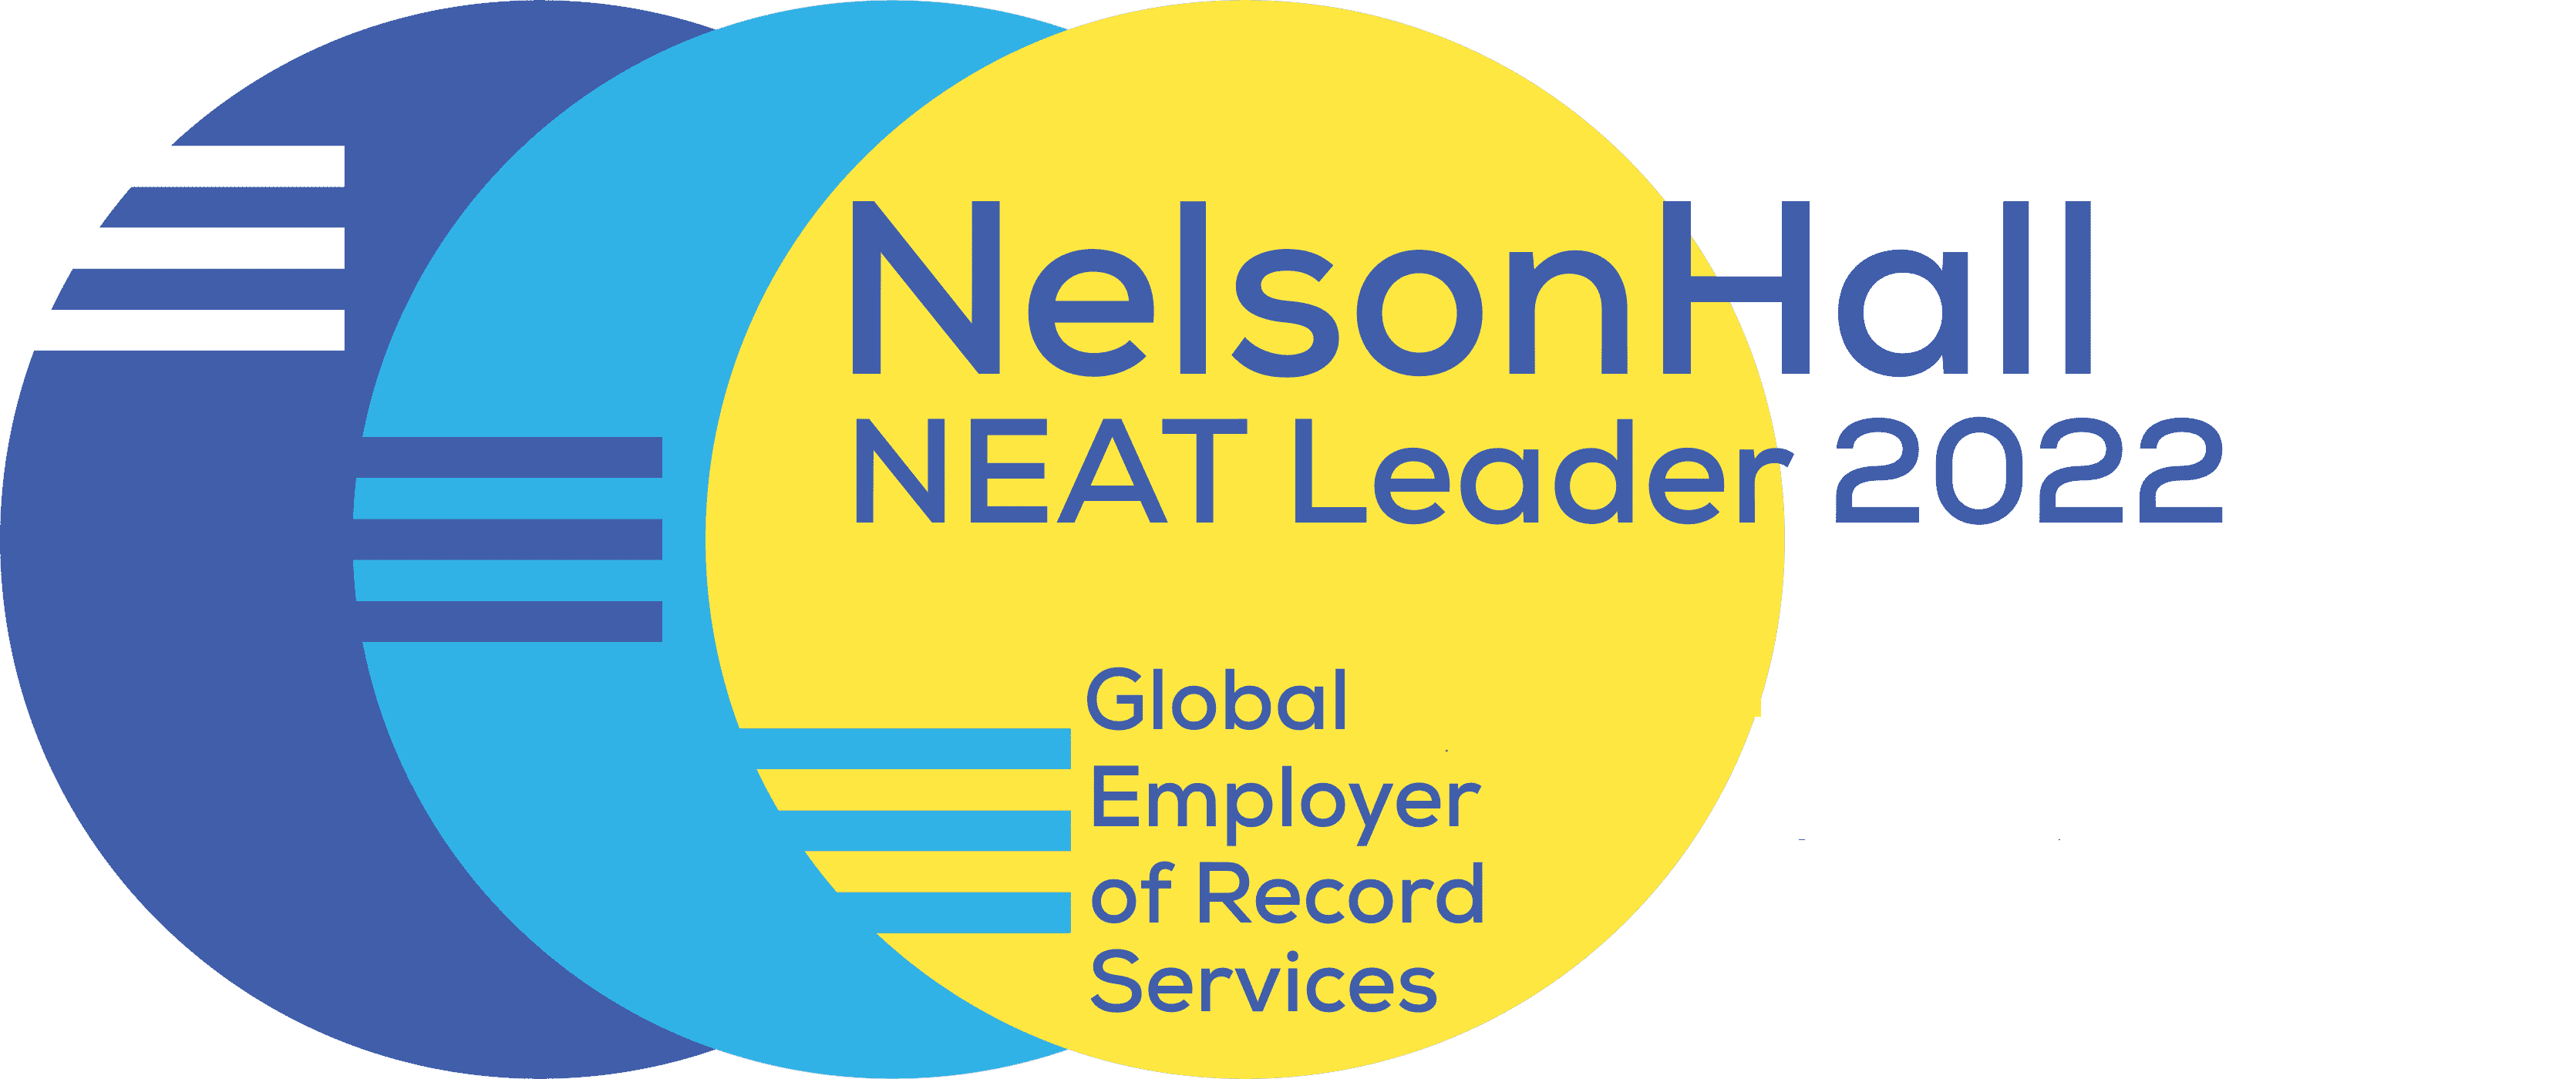 NelsonHall - Transform Through insight